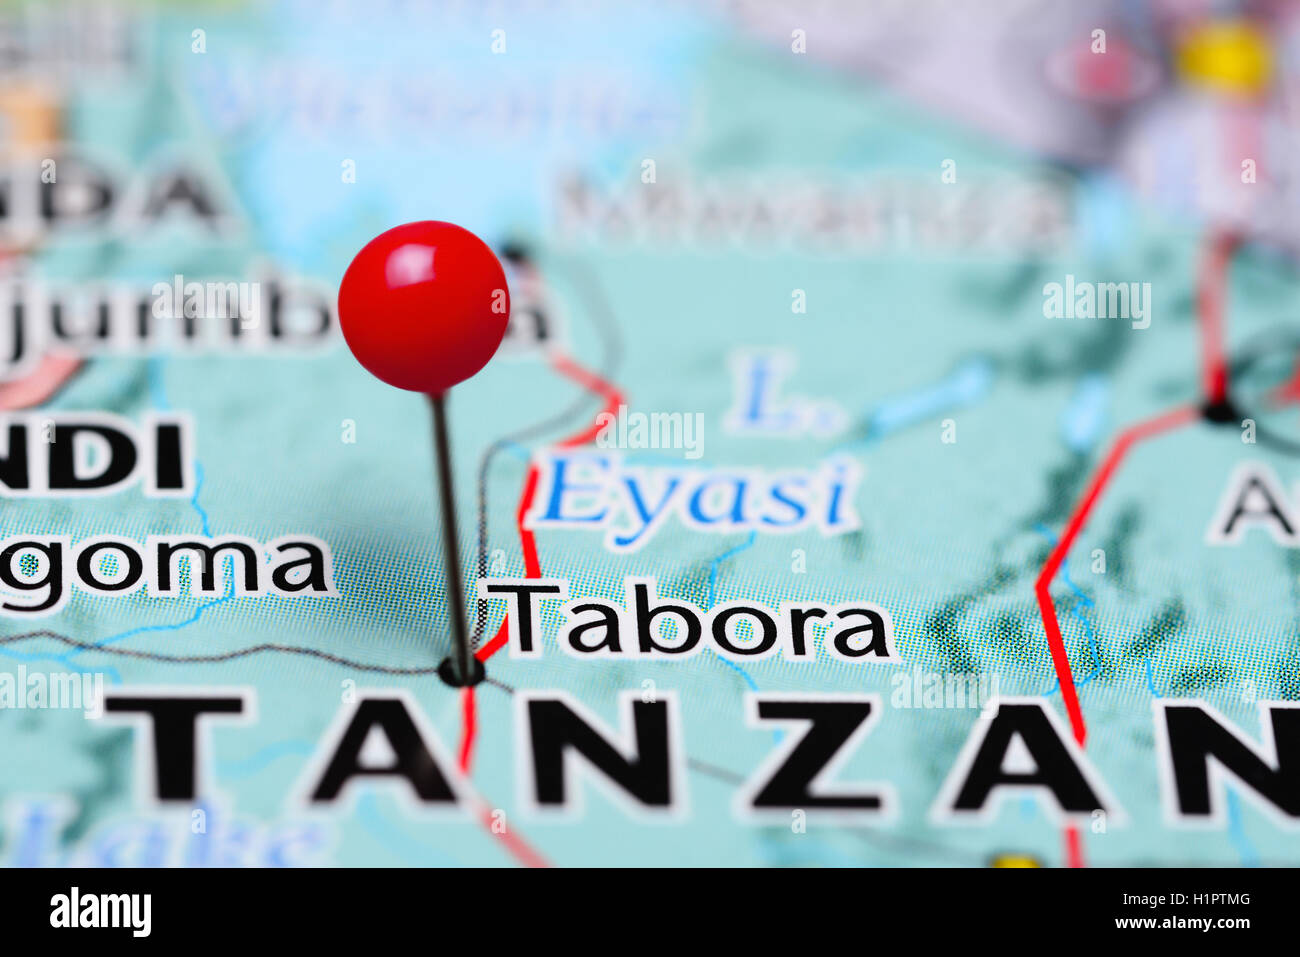 Tabora pinned on a map of Tanzania Stock Photo